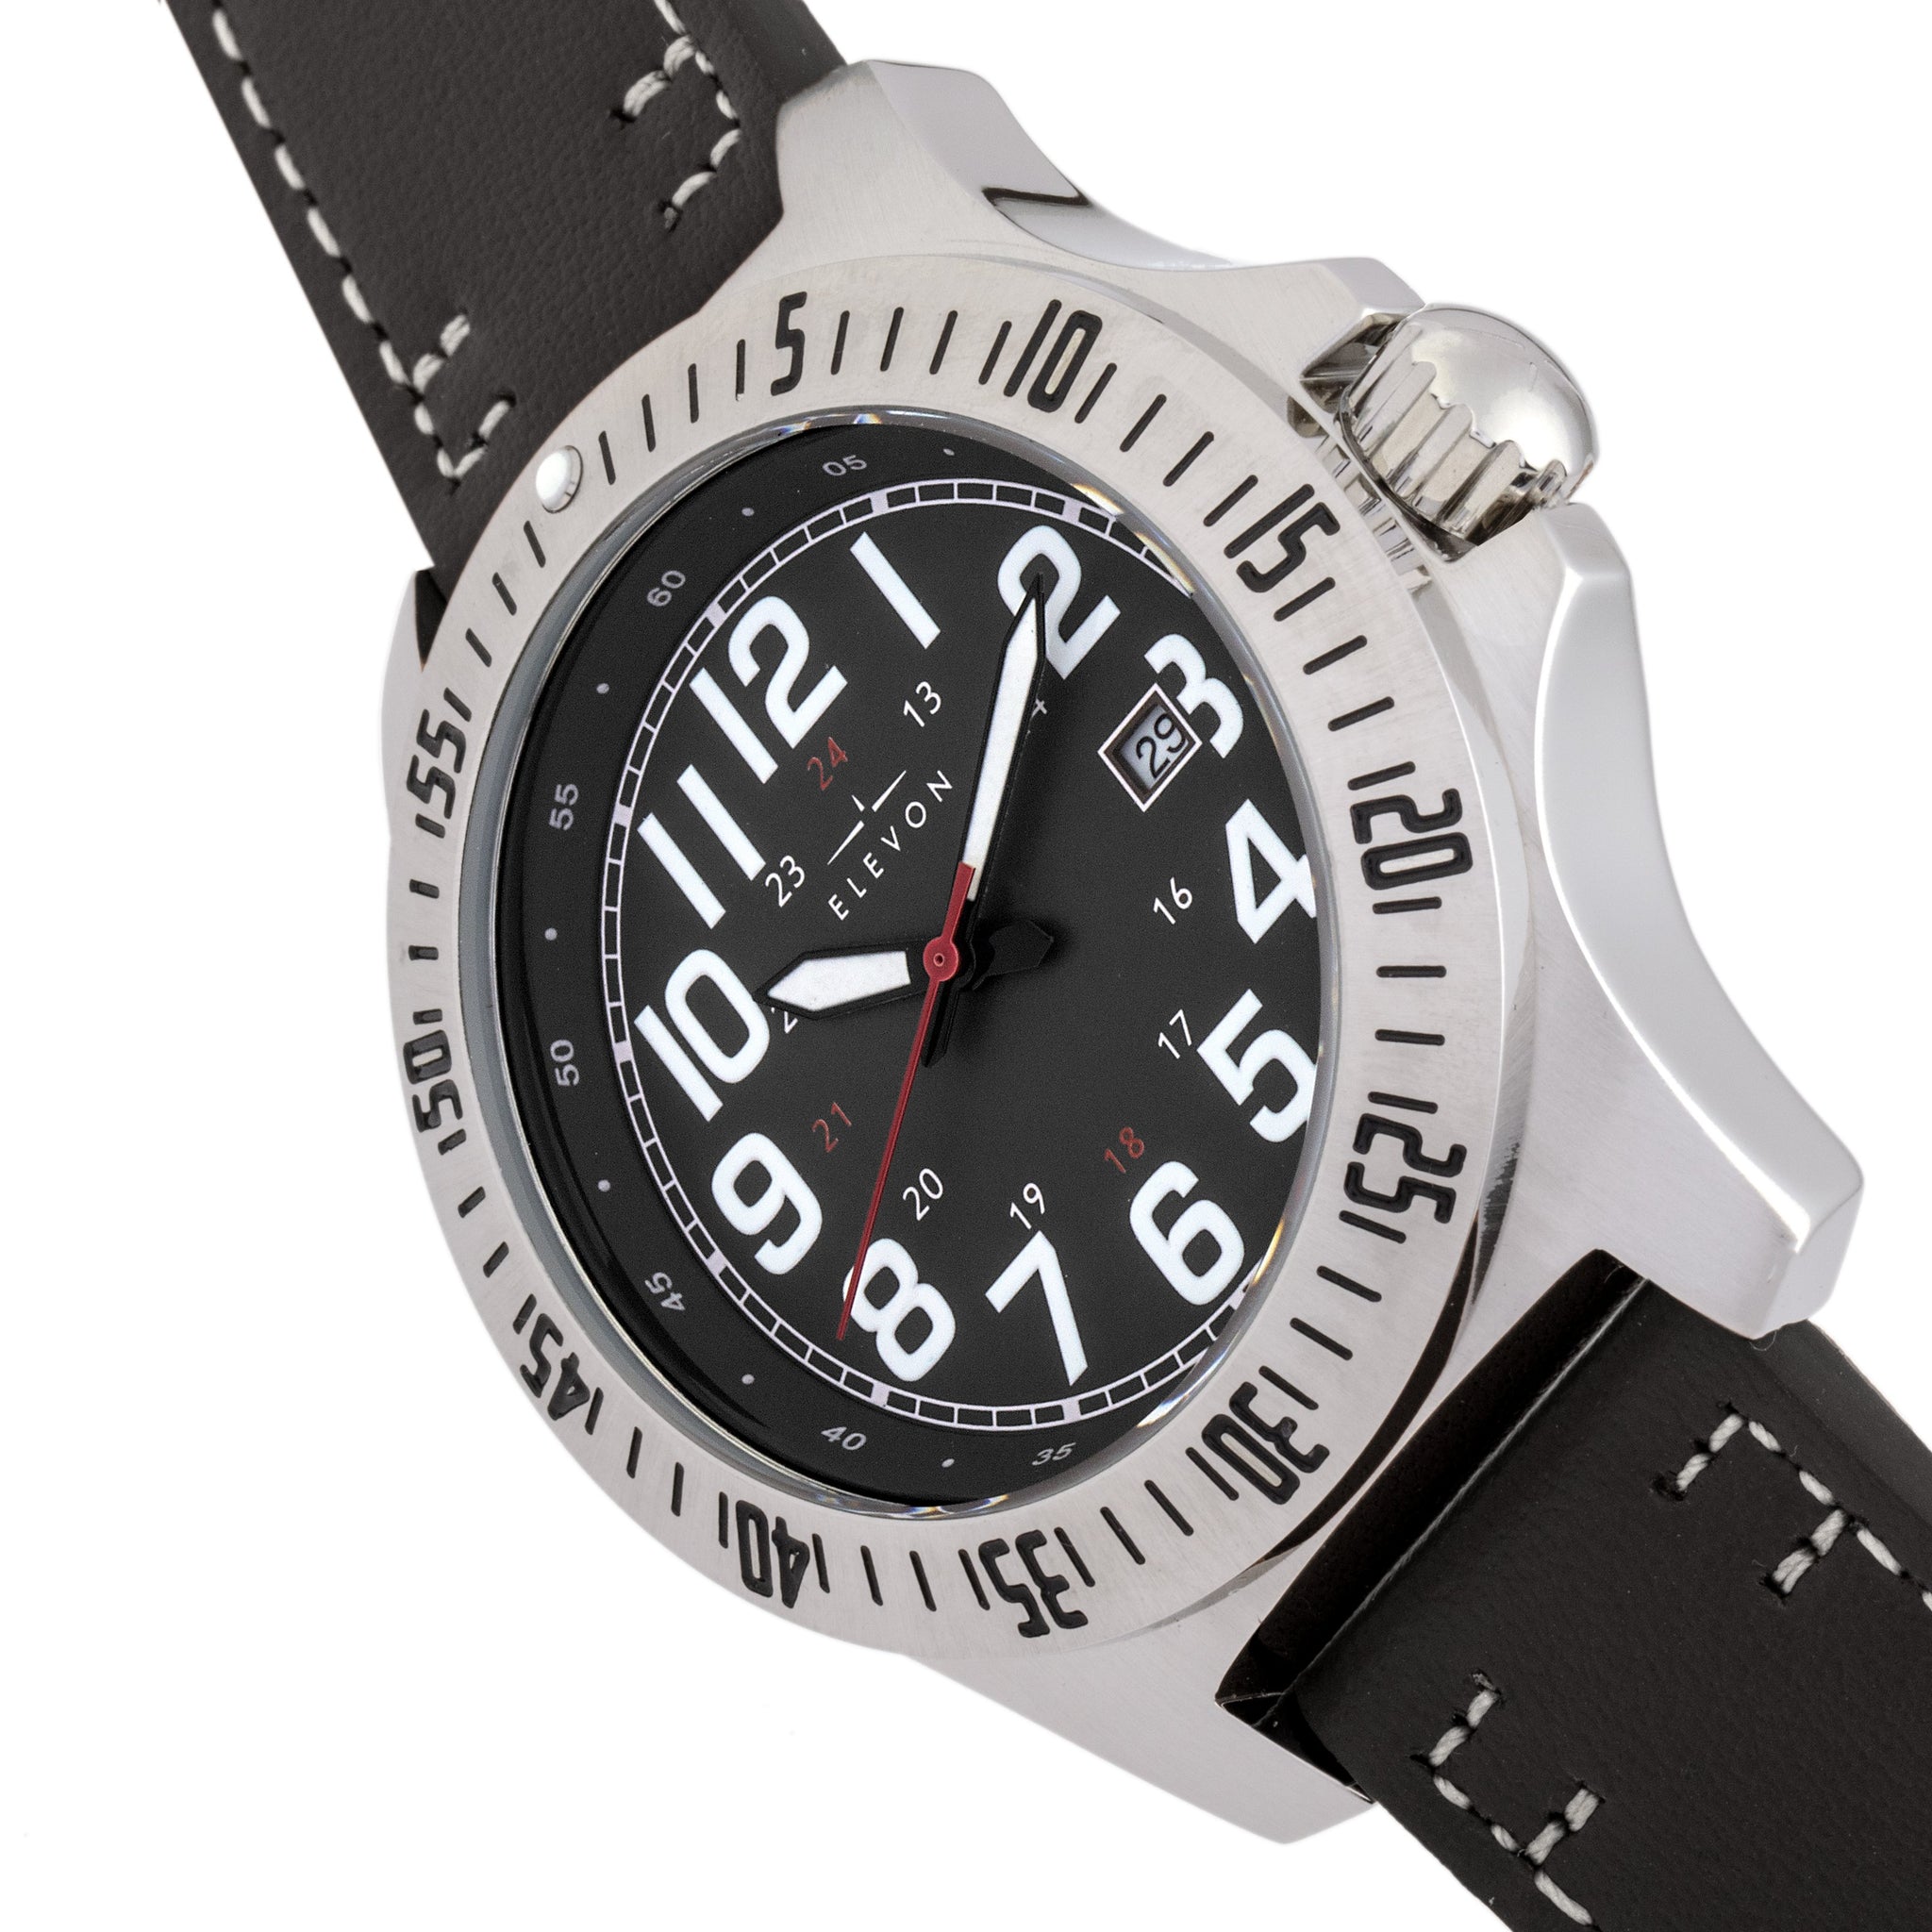 Elevon Aviator Leather-Band Watch w/Date - Black - ELE120-9